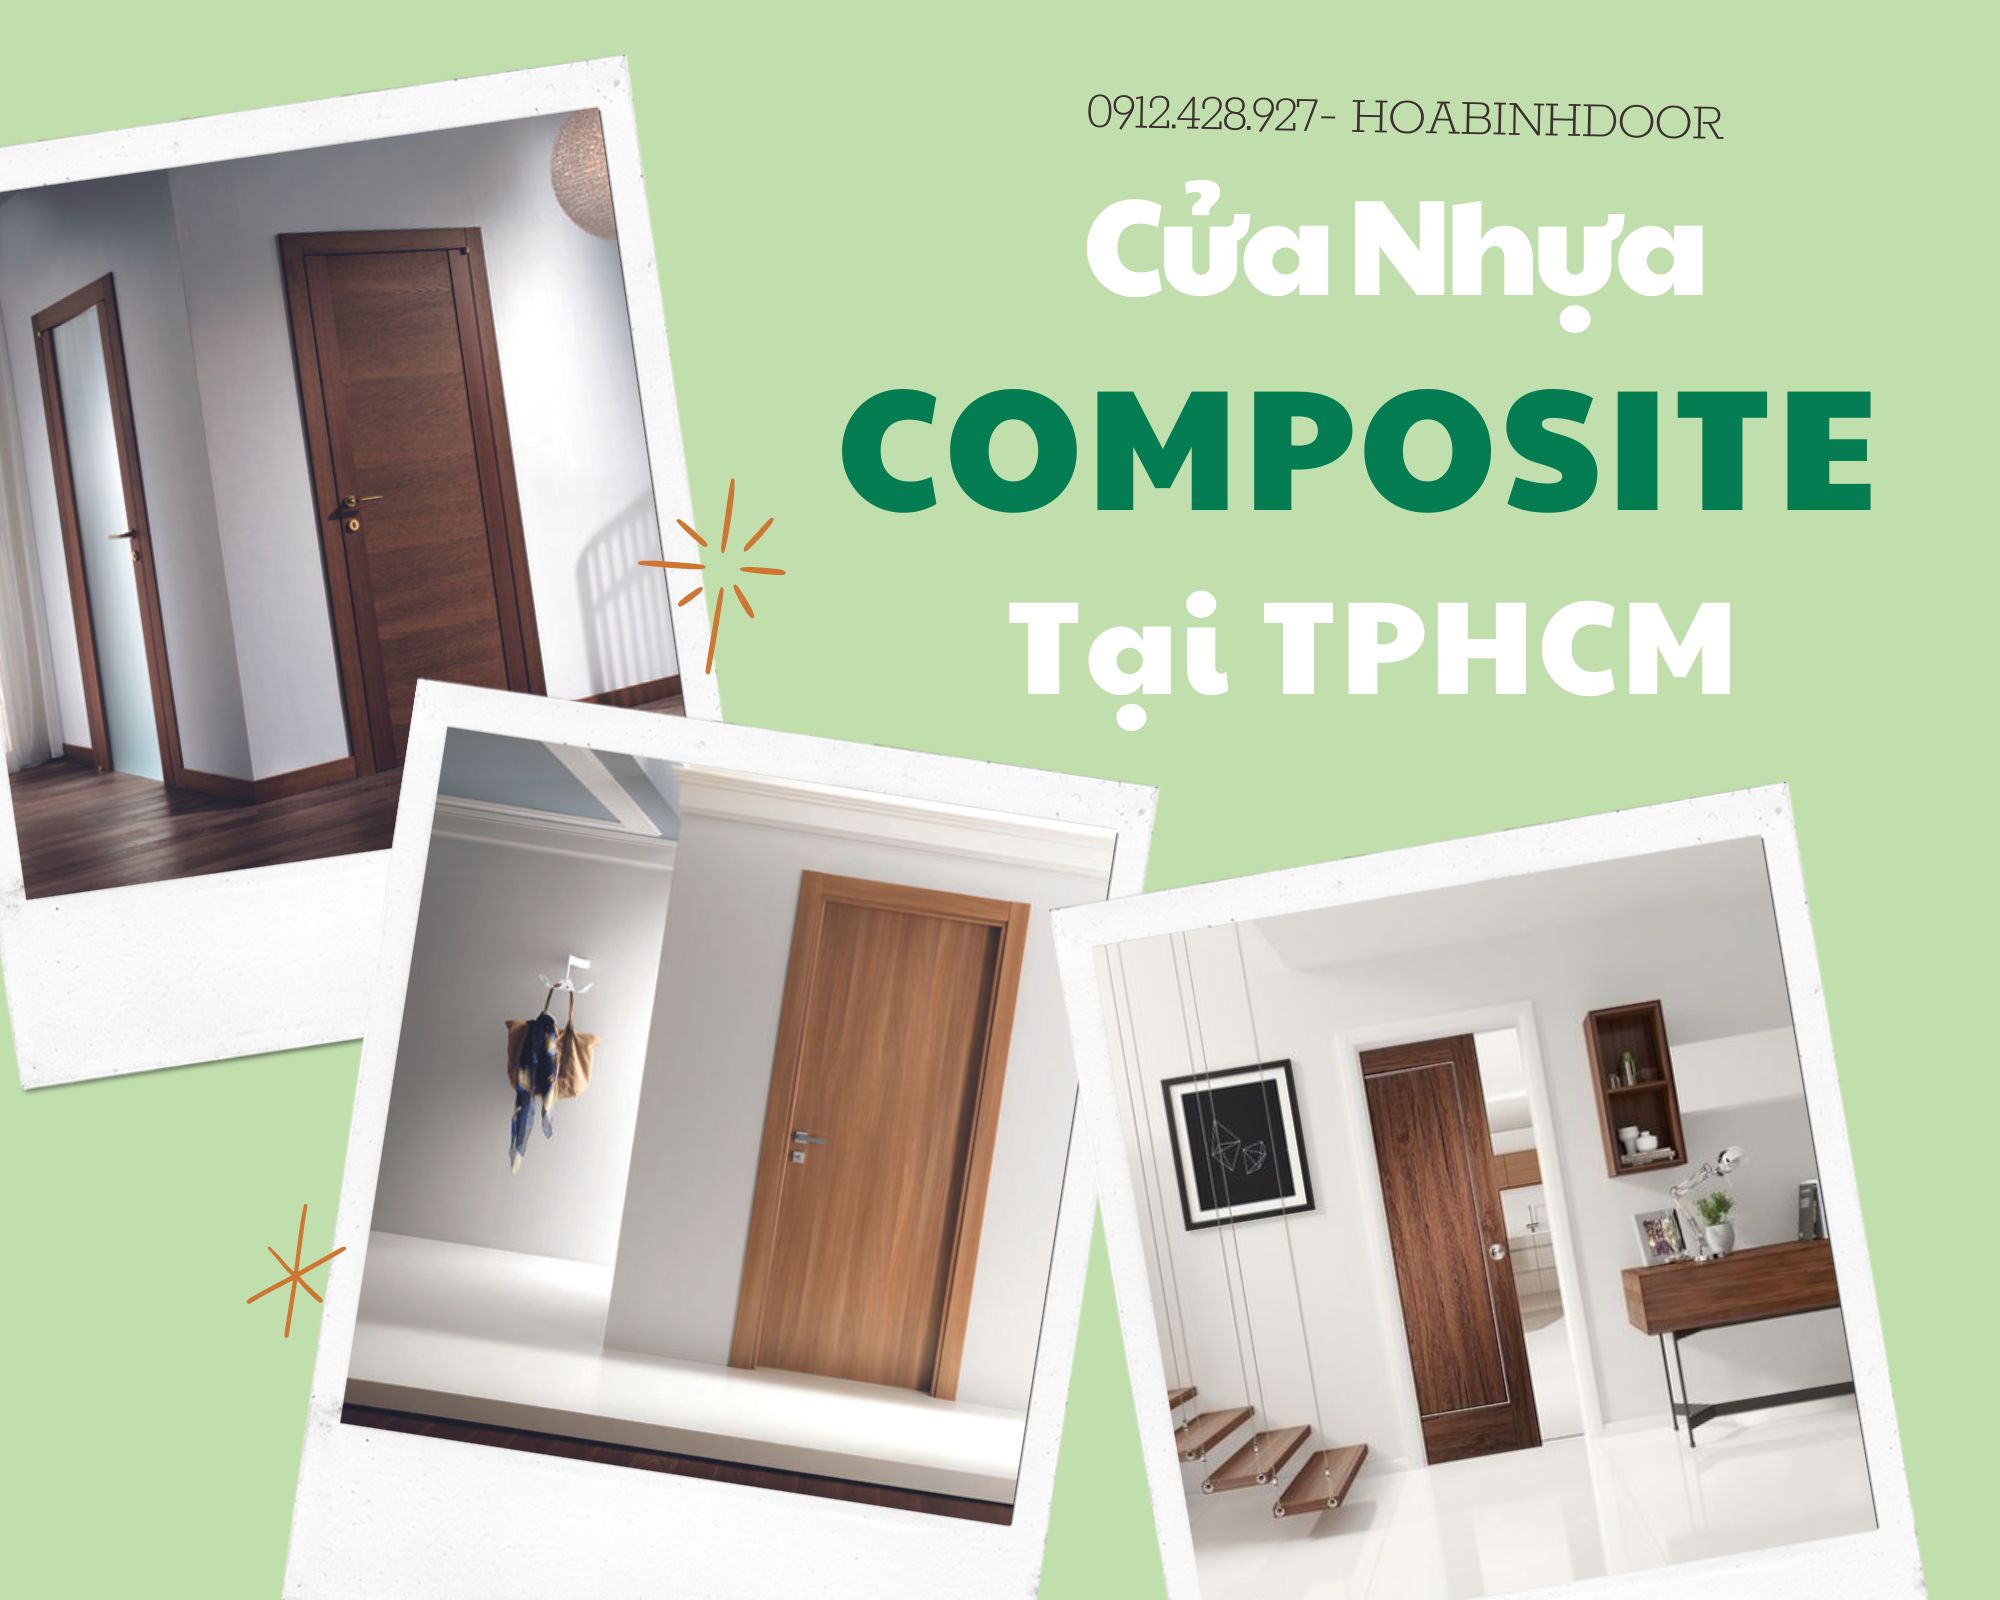 Cửa nhựa Composite tại TPHCM | Cửa nhựa cao cấp